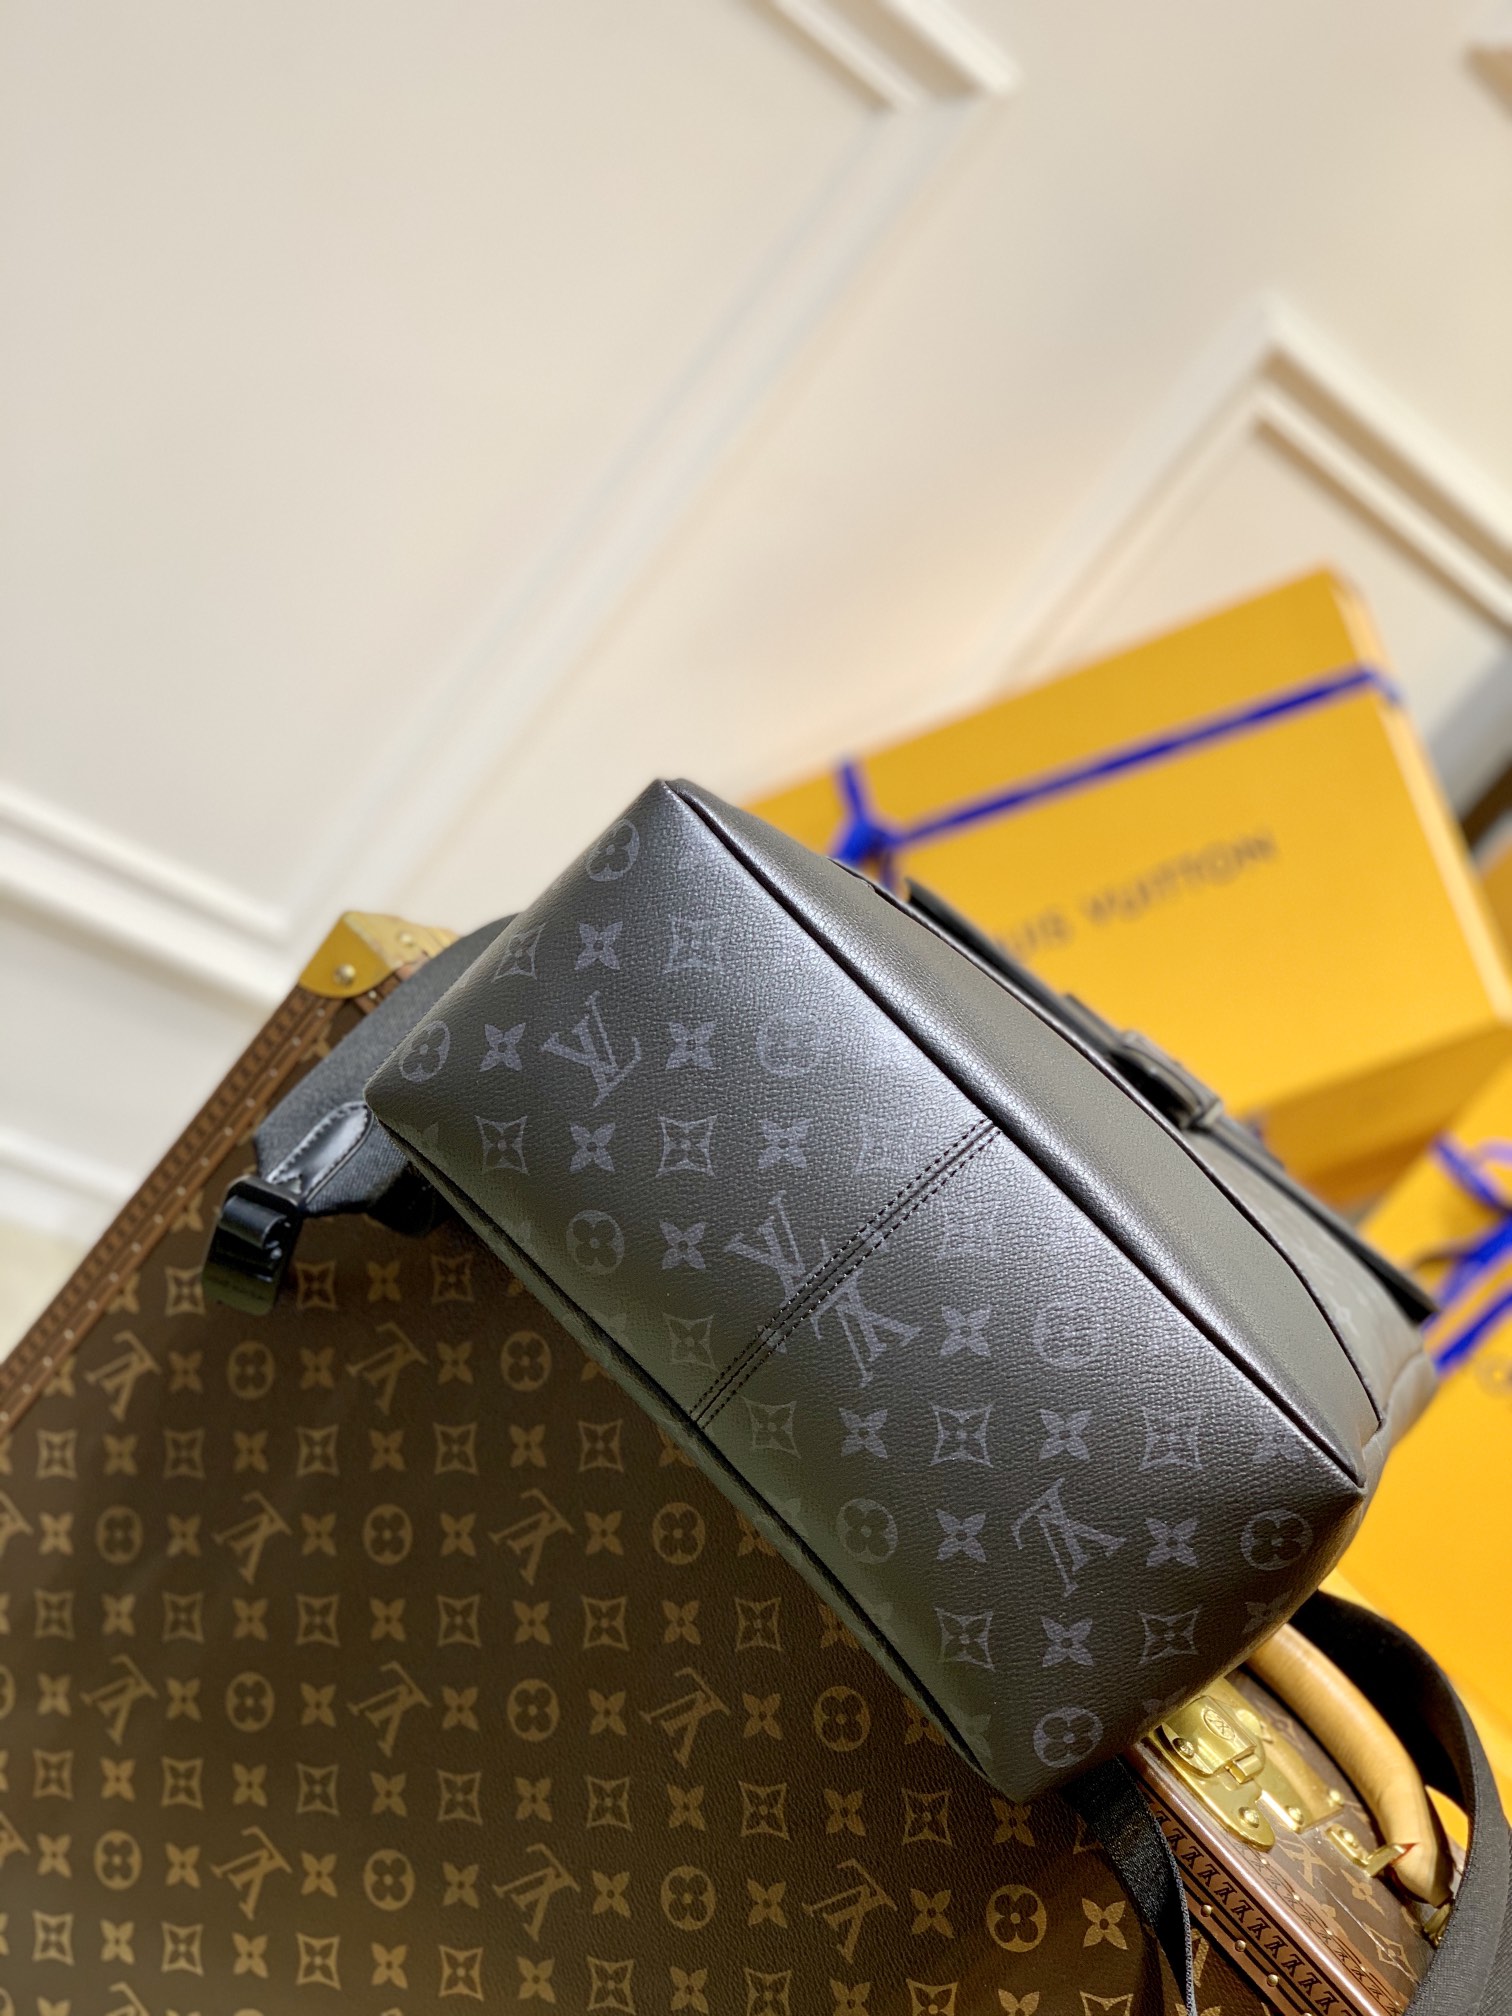 Louis Vuitton Saumur Backpack (M45913)